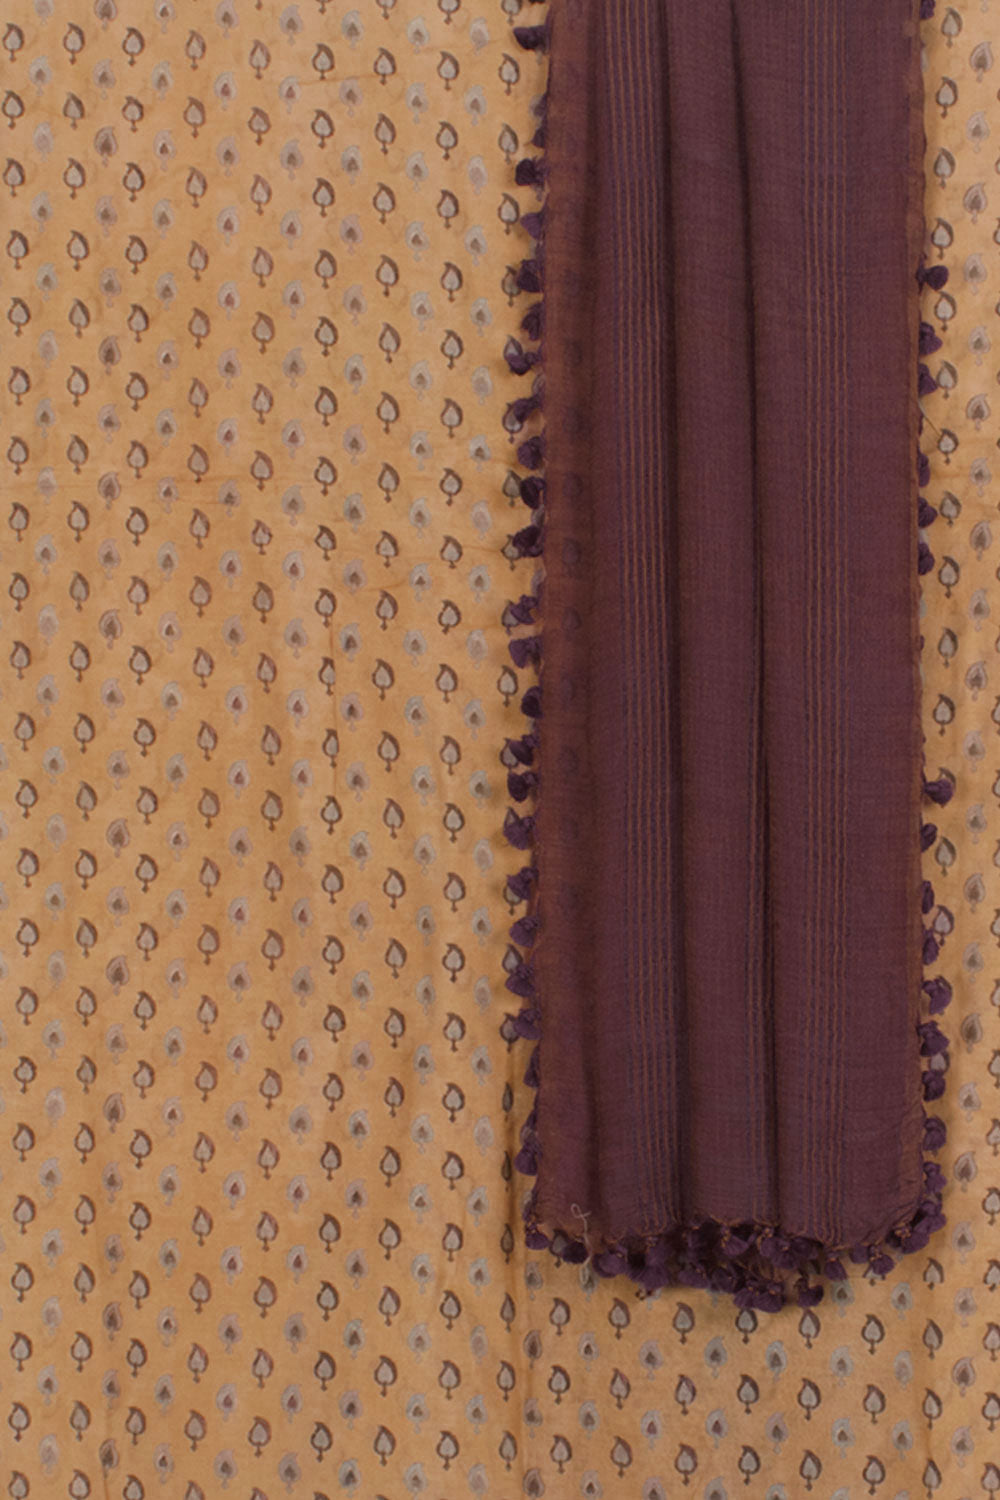 Digital Printed Chanderi Silk Cotton 2-Piece Salwar Suit Material with Handloom Dupatta